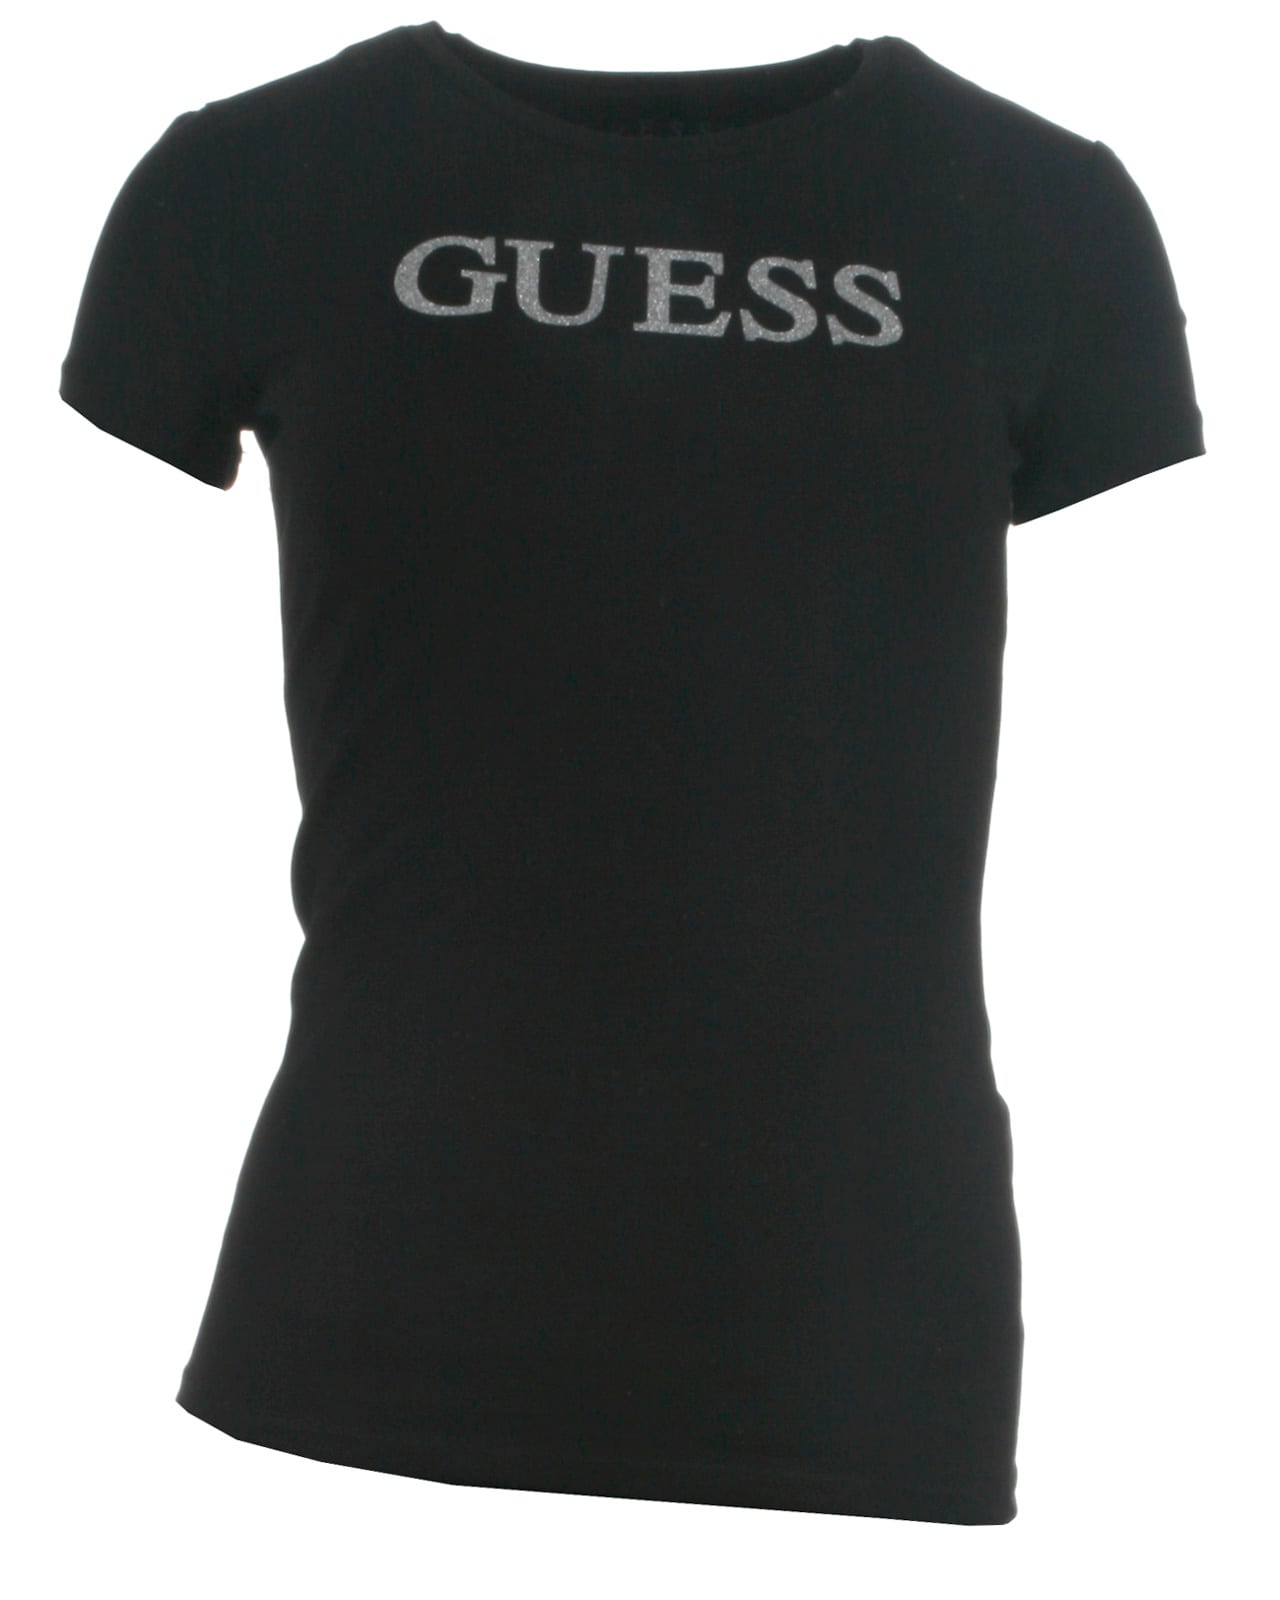 Guess t-shirt s/s